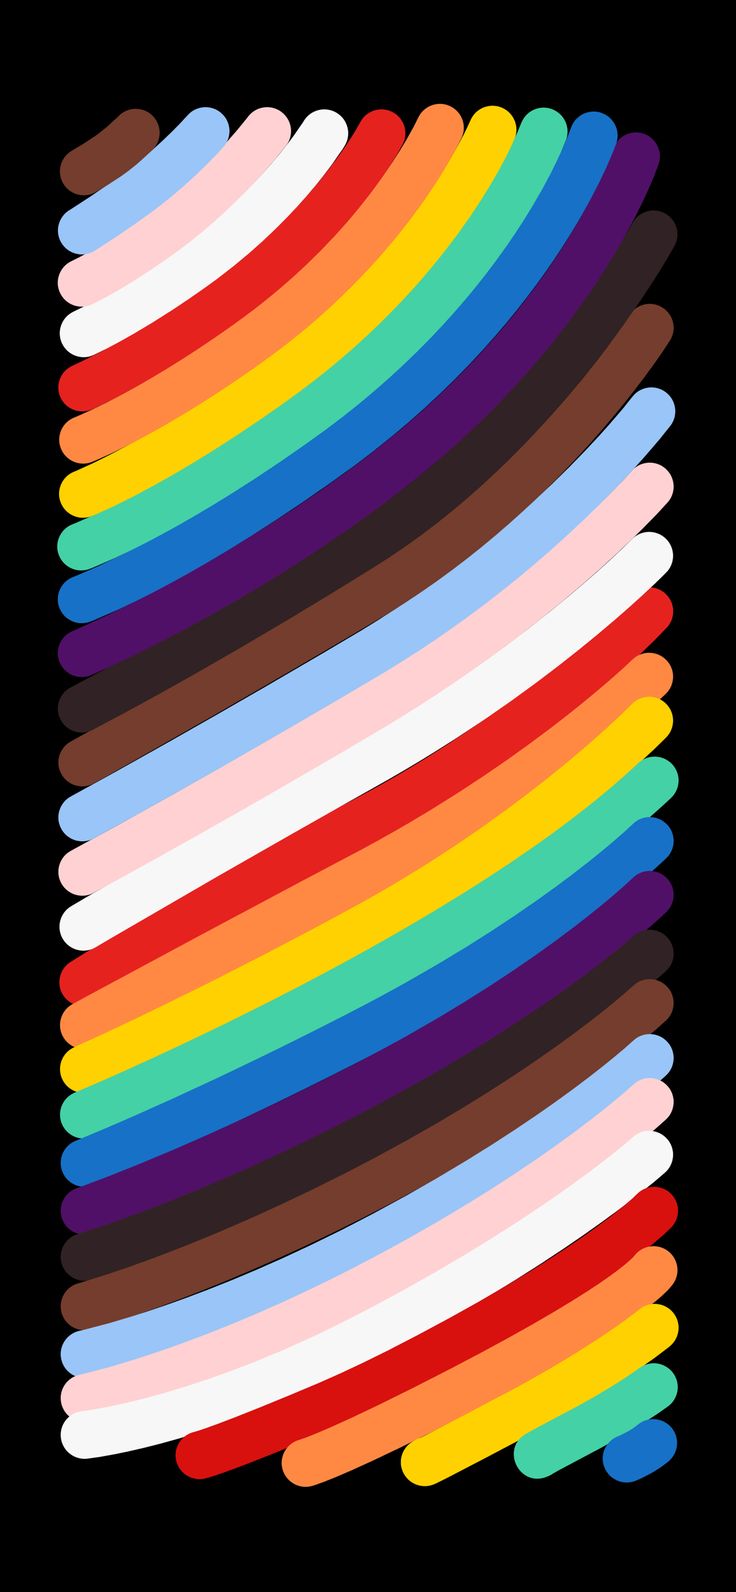 Apple Pride 2021 (Black). Apple watch wallpaper, Apple logo wallpaper, iPhone wallpaper